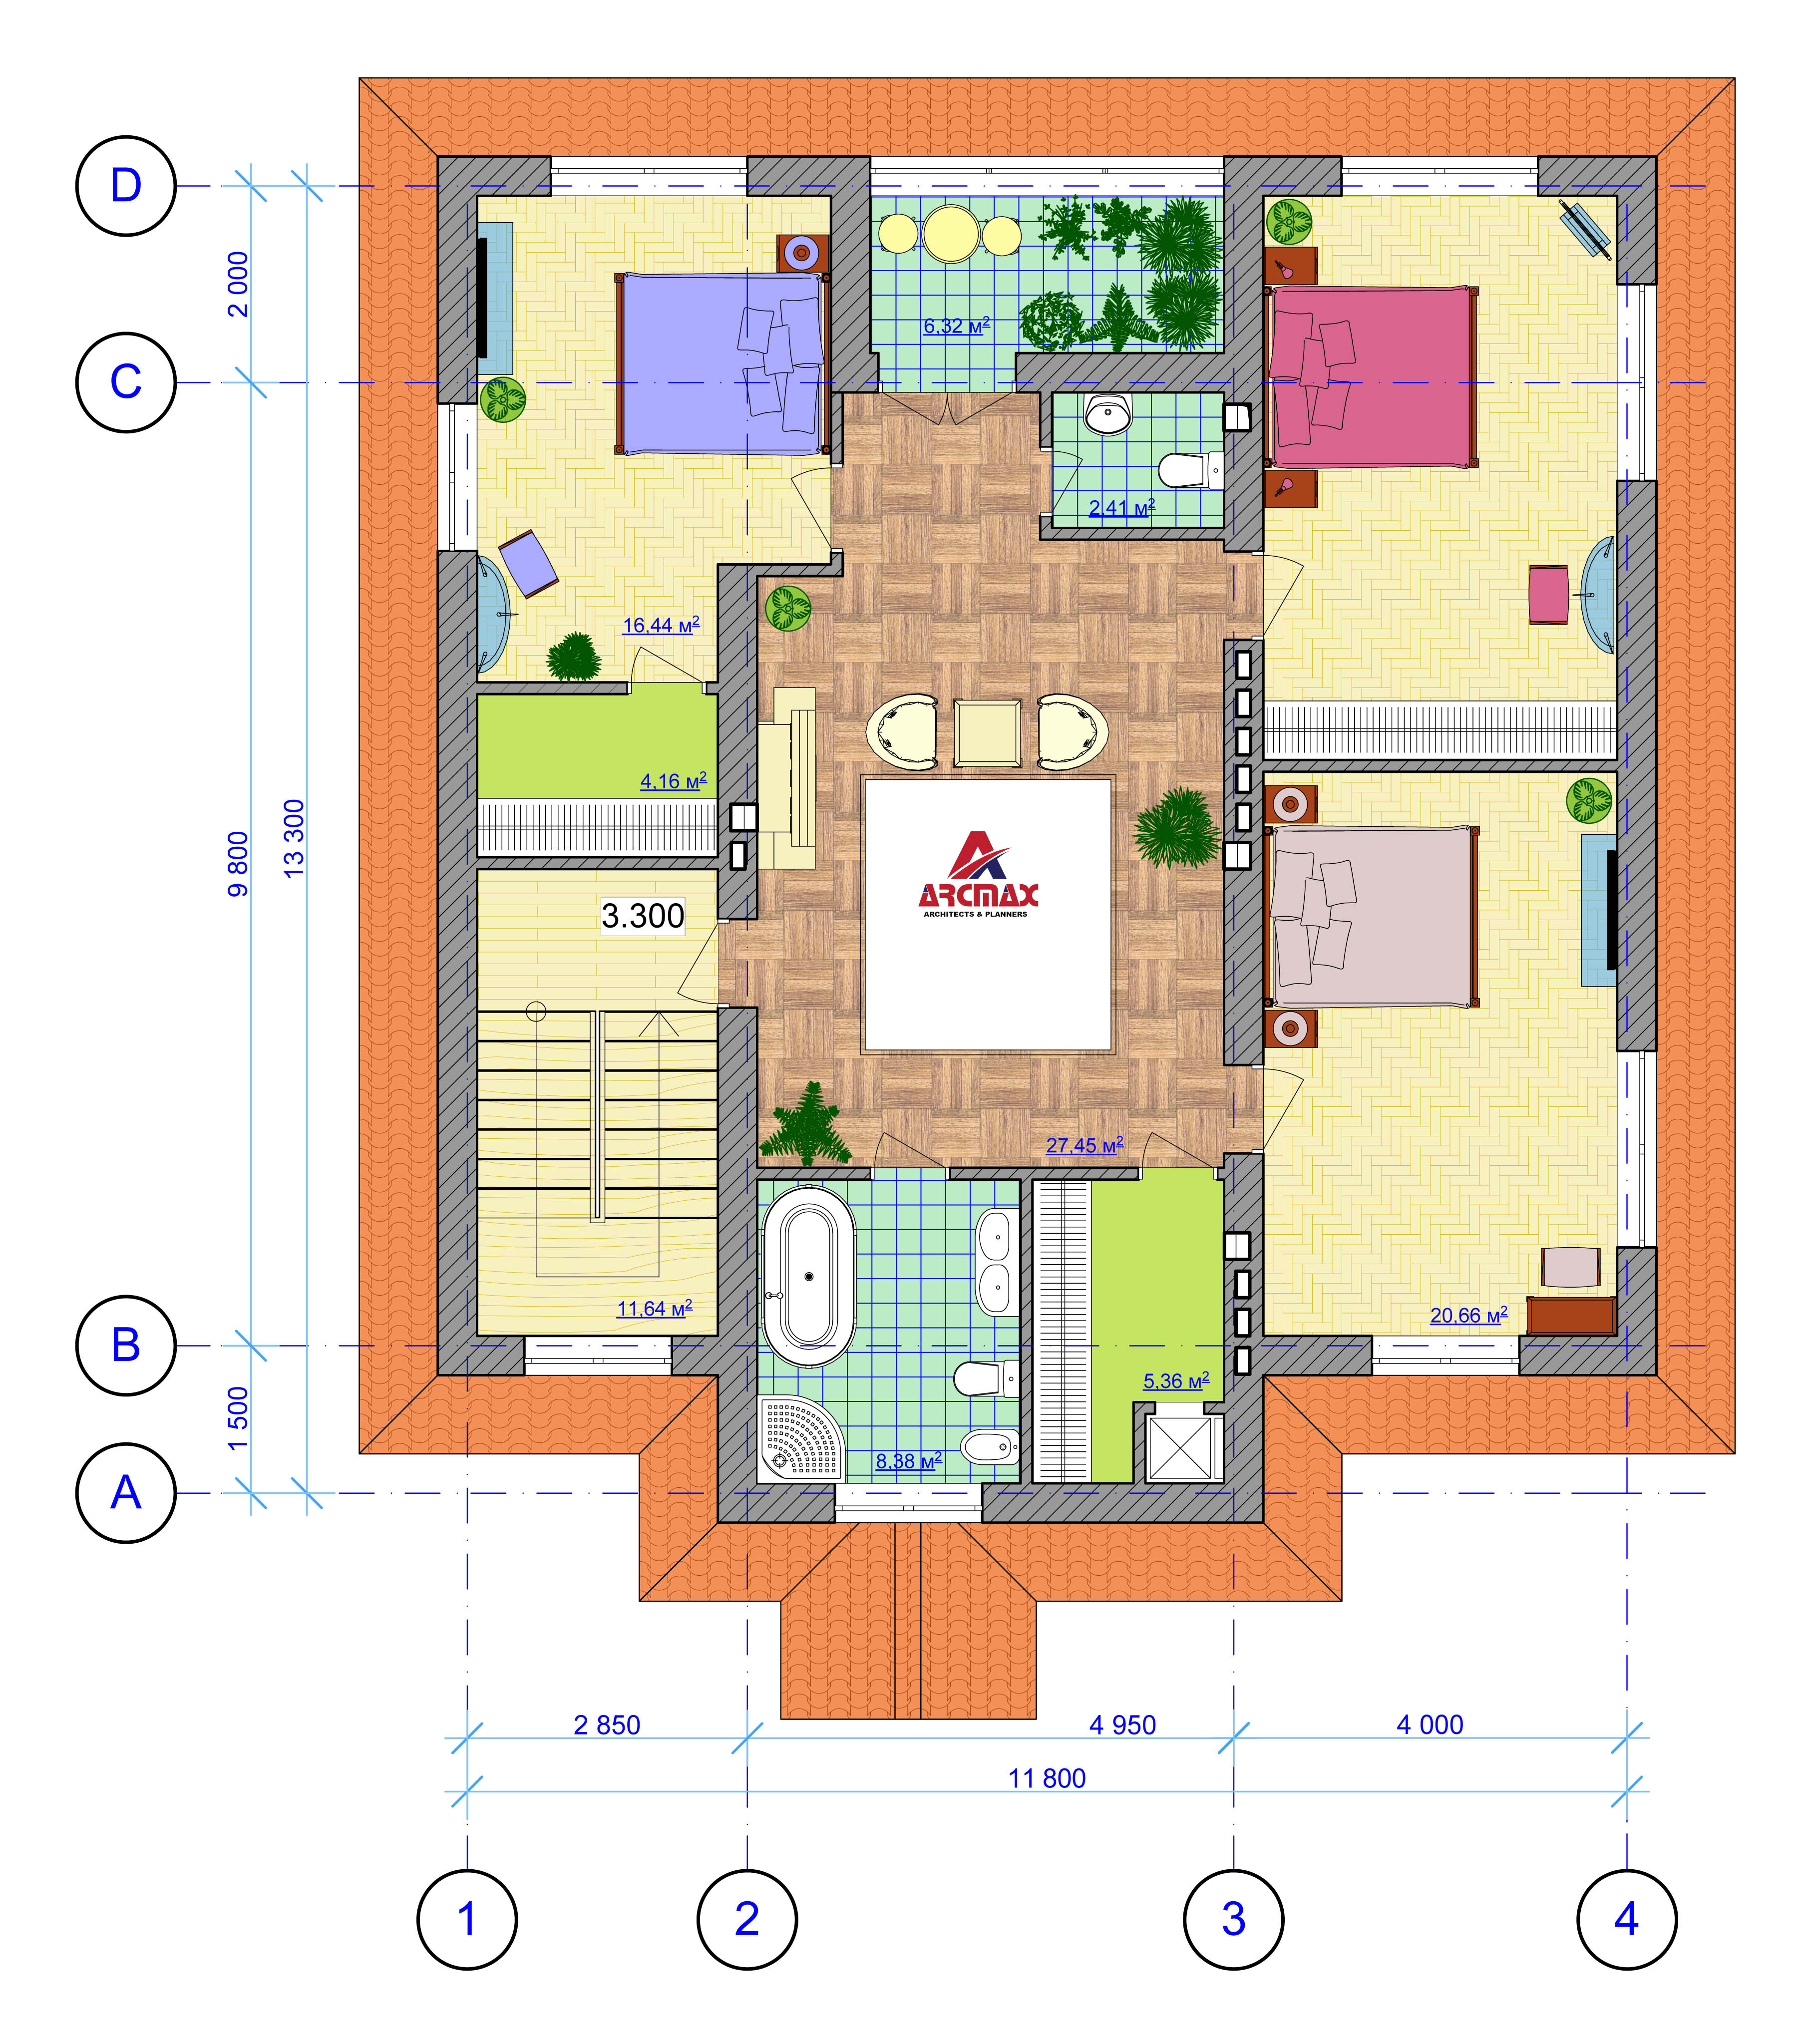 House-design-online - Home Design Ideas